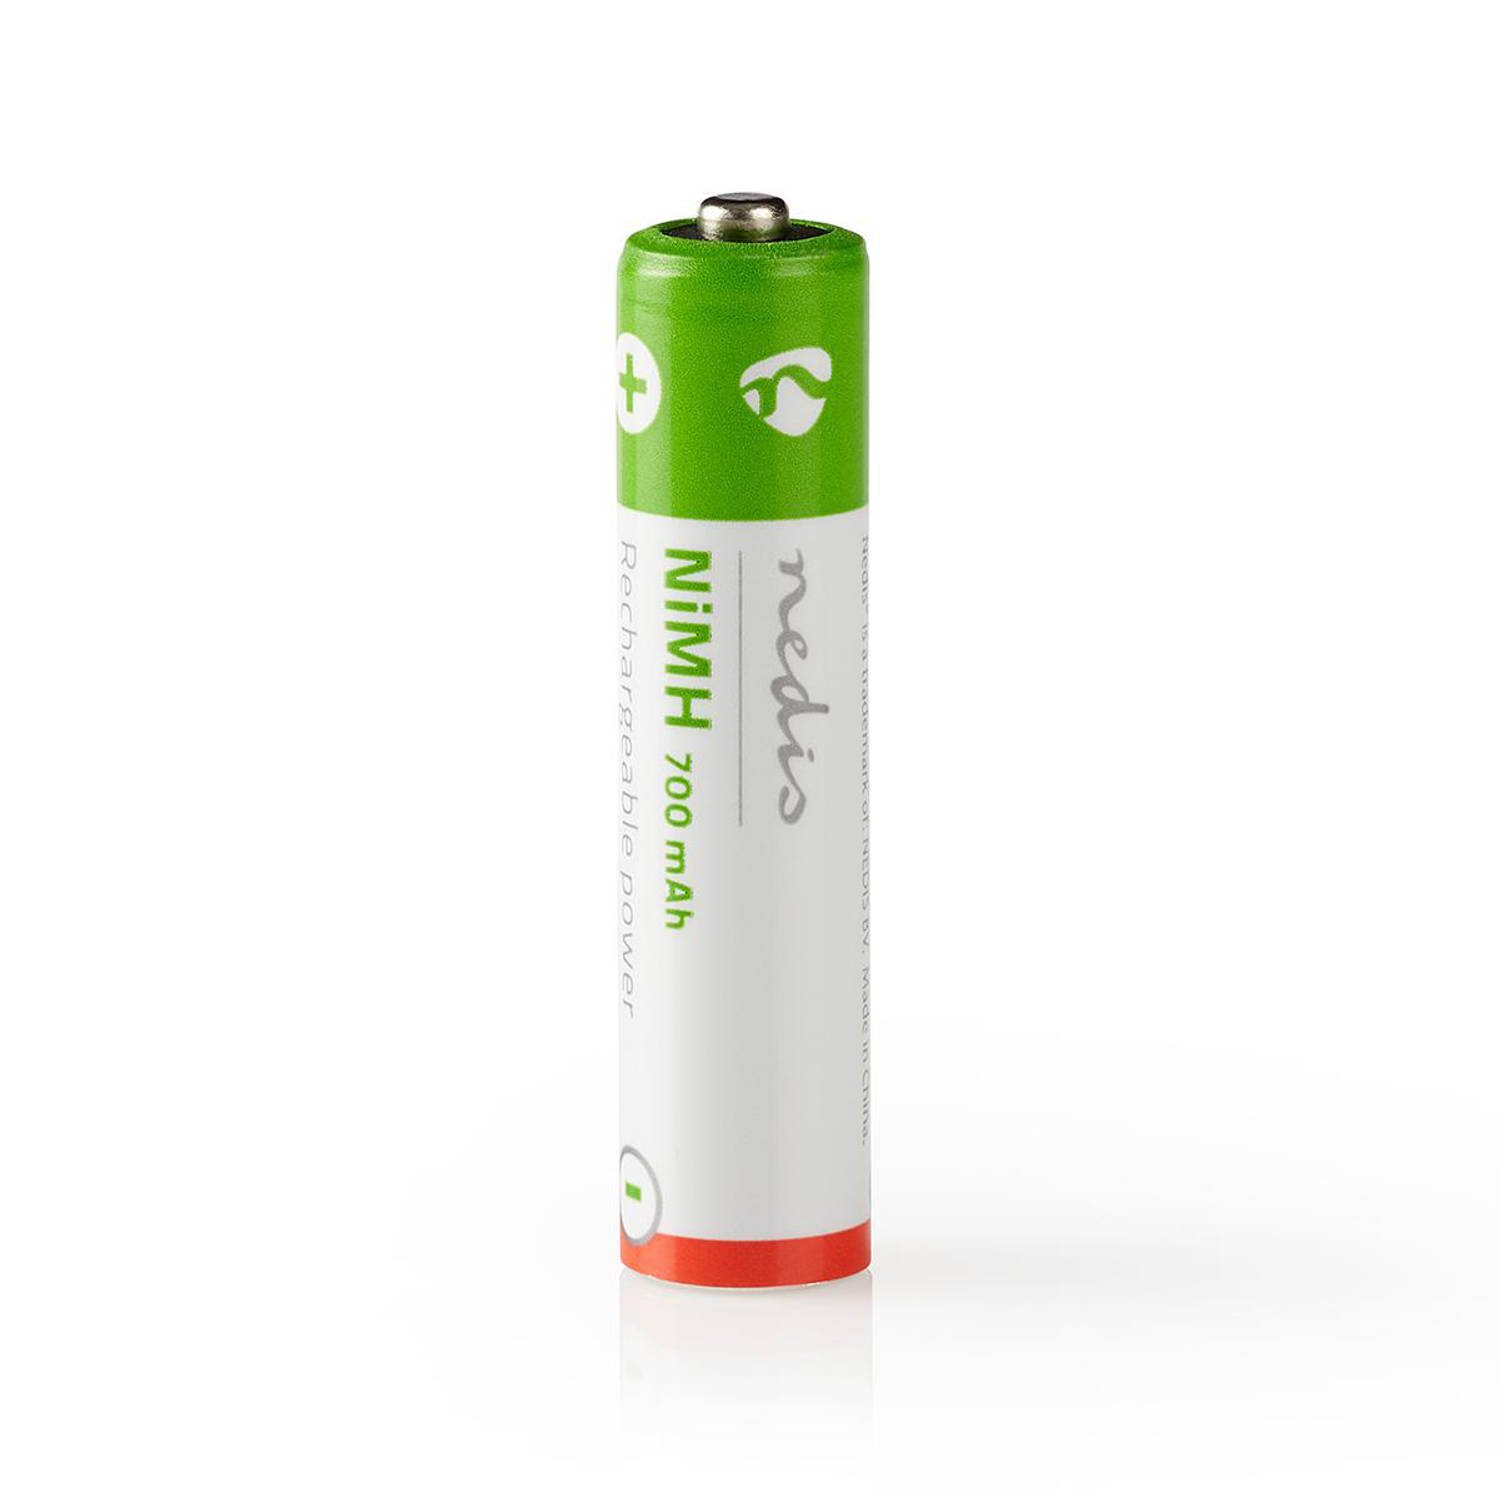 Nedis Oplaadbare NiMH-Batterij AAA - BANM7HR032B - Groen